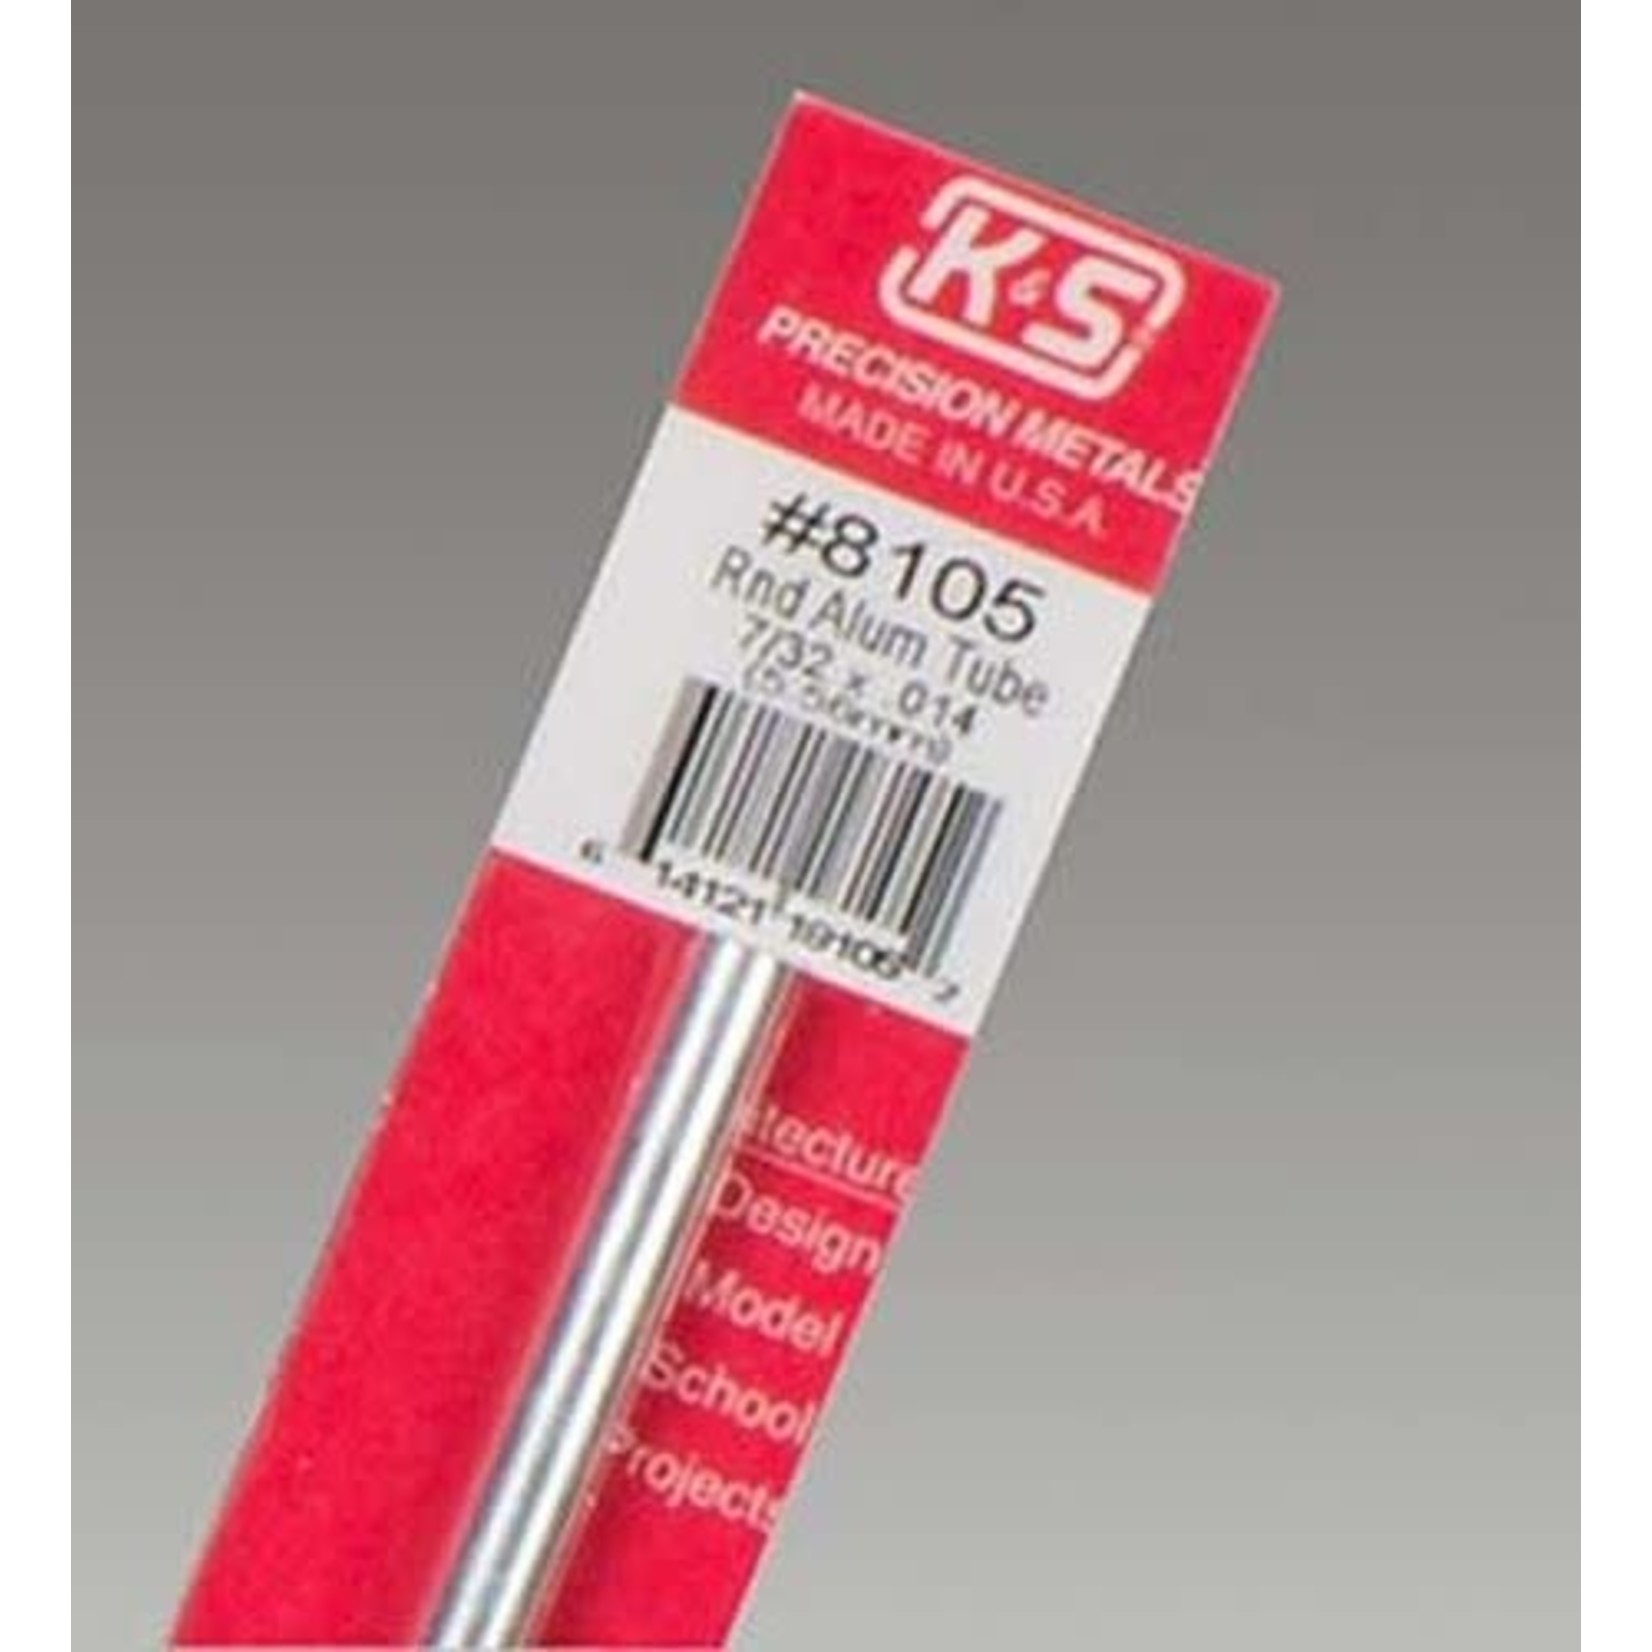 K&S Metals KSE8105 7/32'' OD Aluminum Tube (1pc)